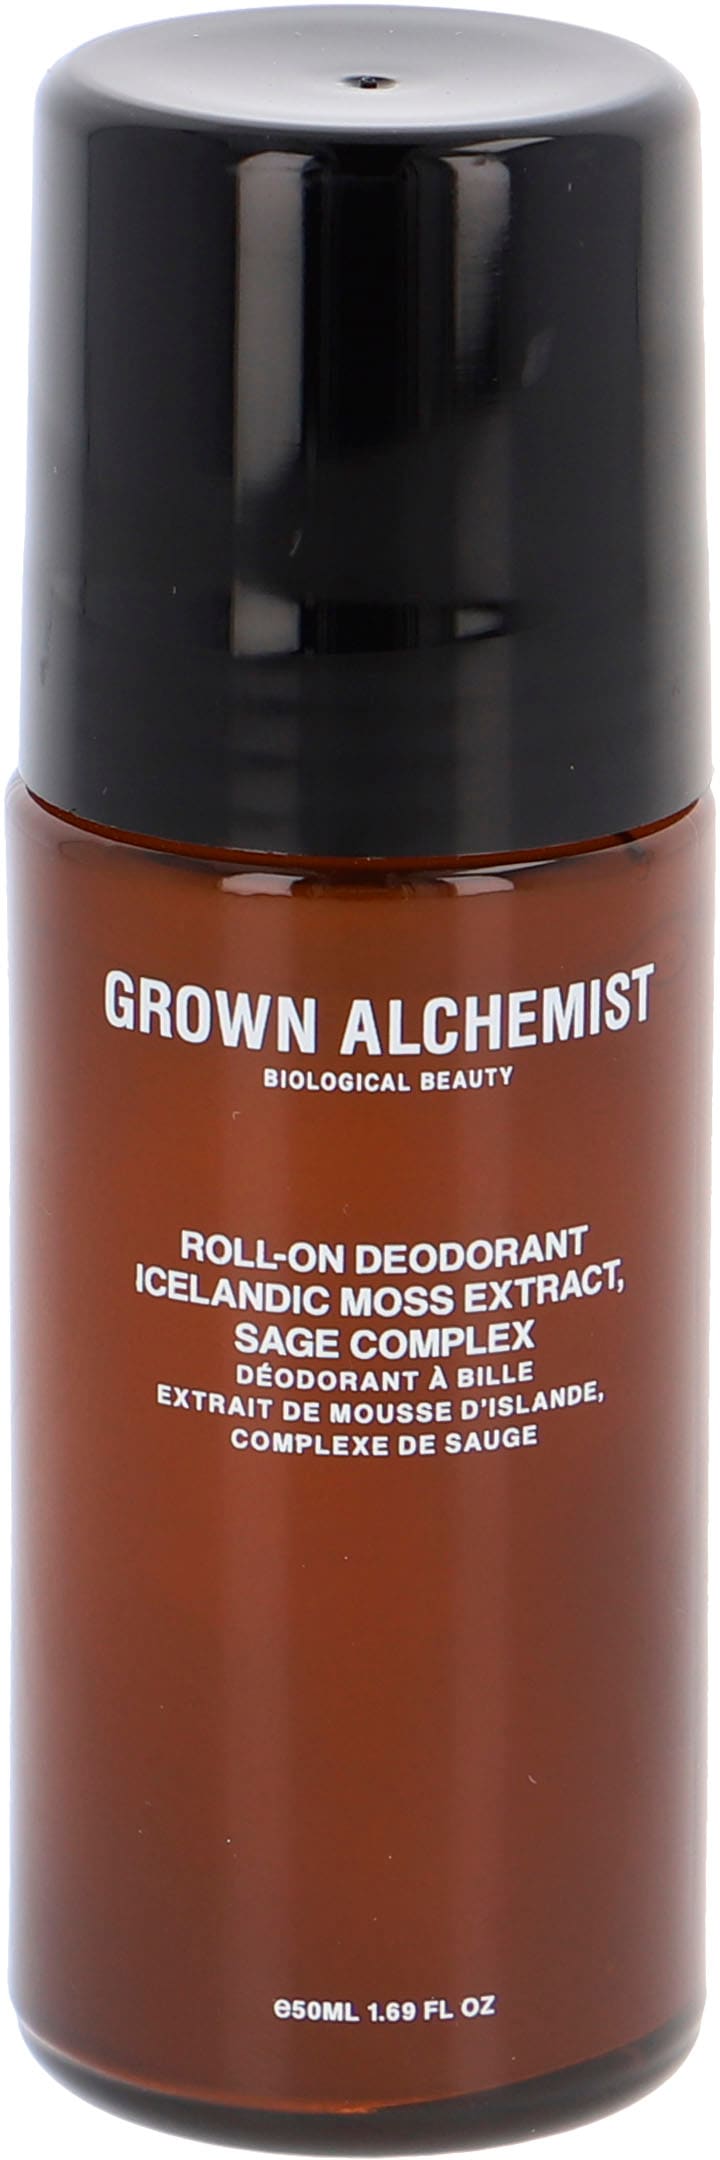 | GROWN Icelandic Moss Extract, Deo-Roller BAUR ALCHEMIST »Roll-On Complex« Sage Deodorant: